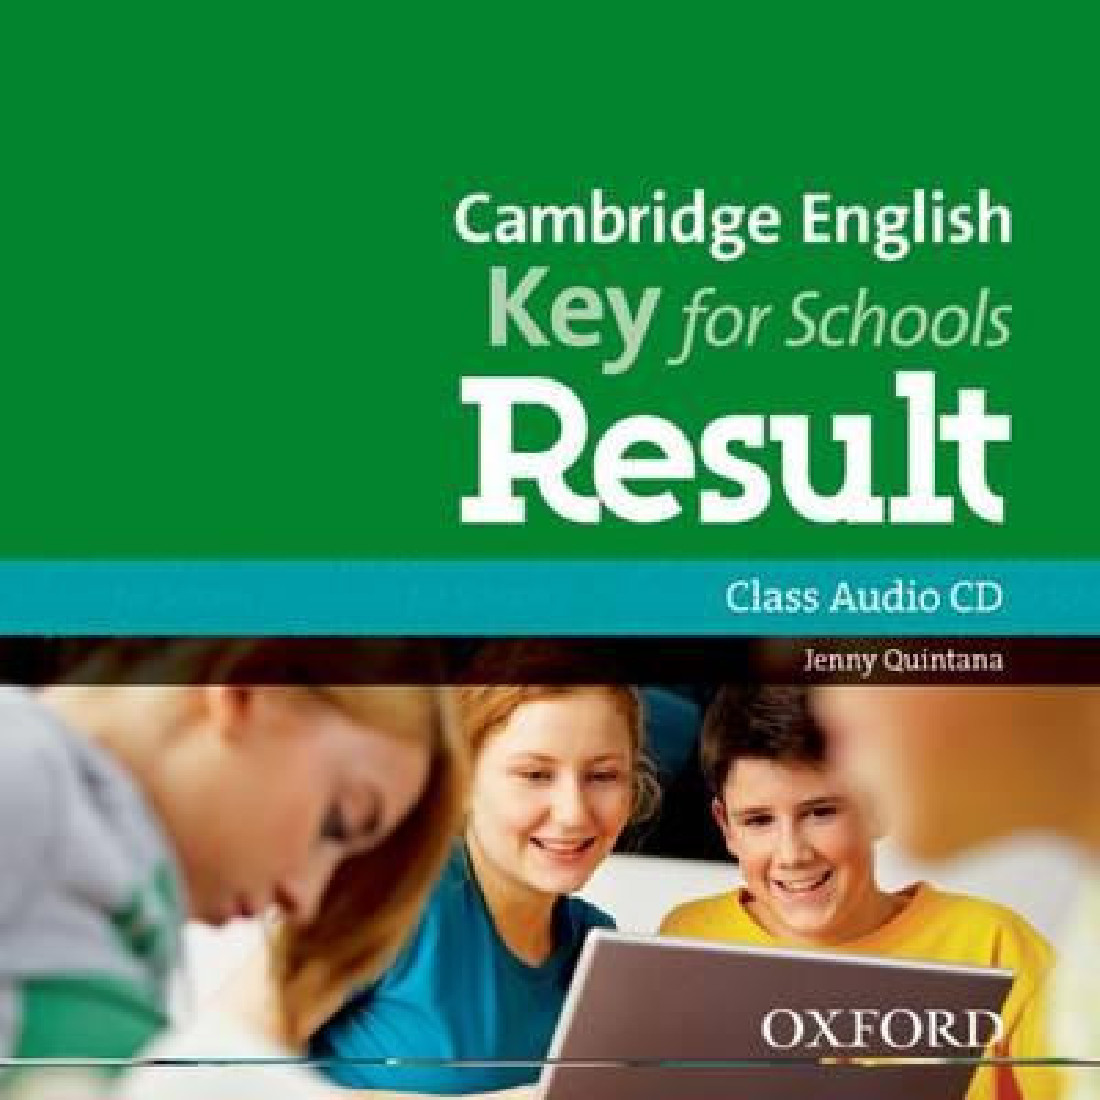 CAMBRIDGE ENGLISH KEY FOR SCHOOLS RESULT CD CLASS